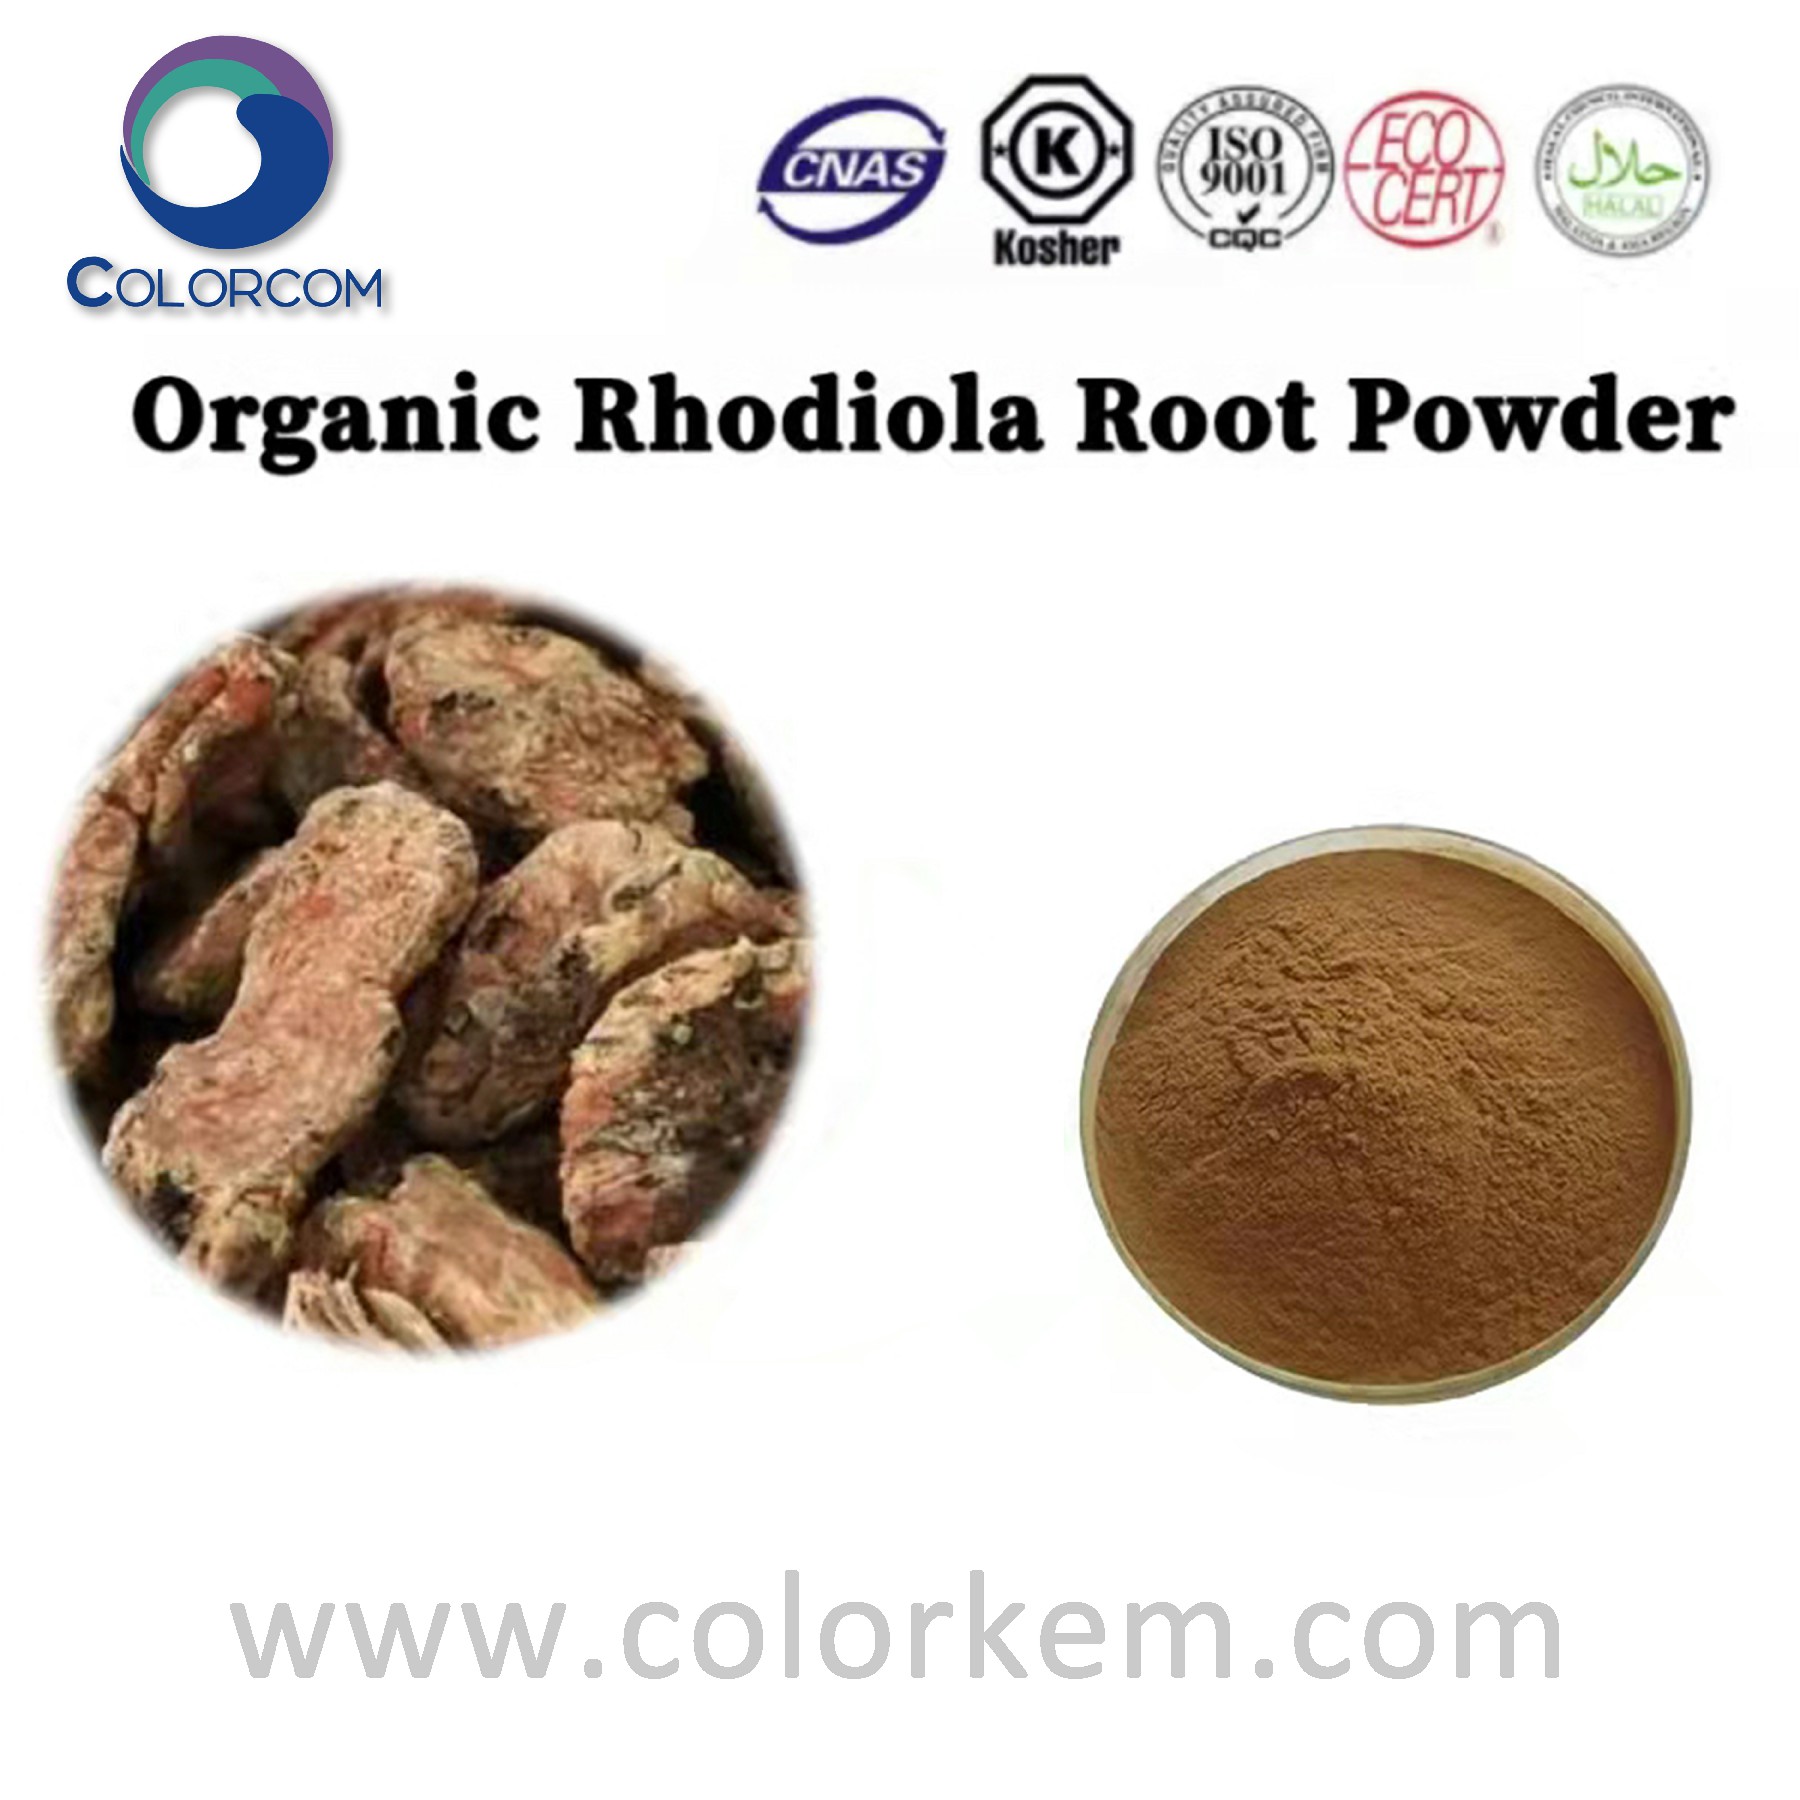 Organic Rhodiola Root powder